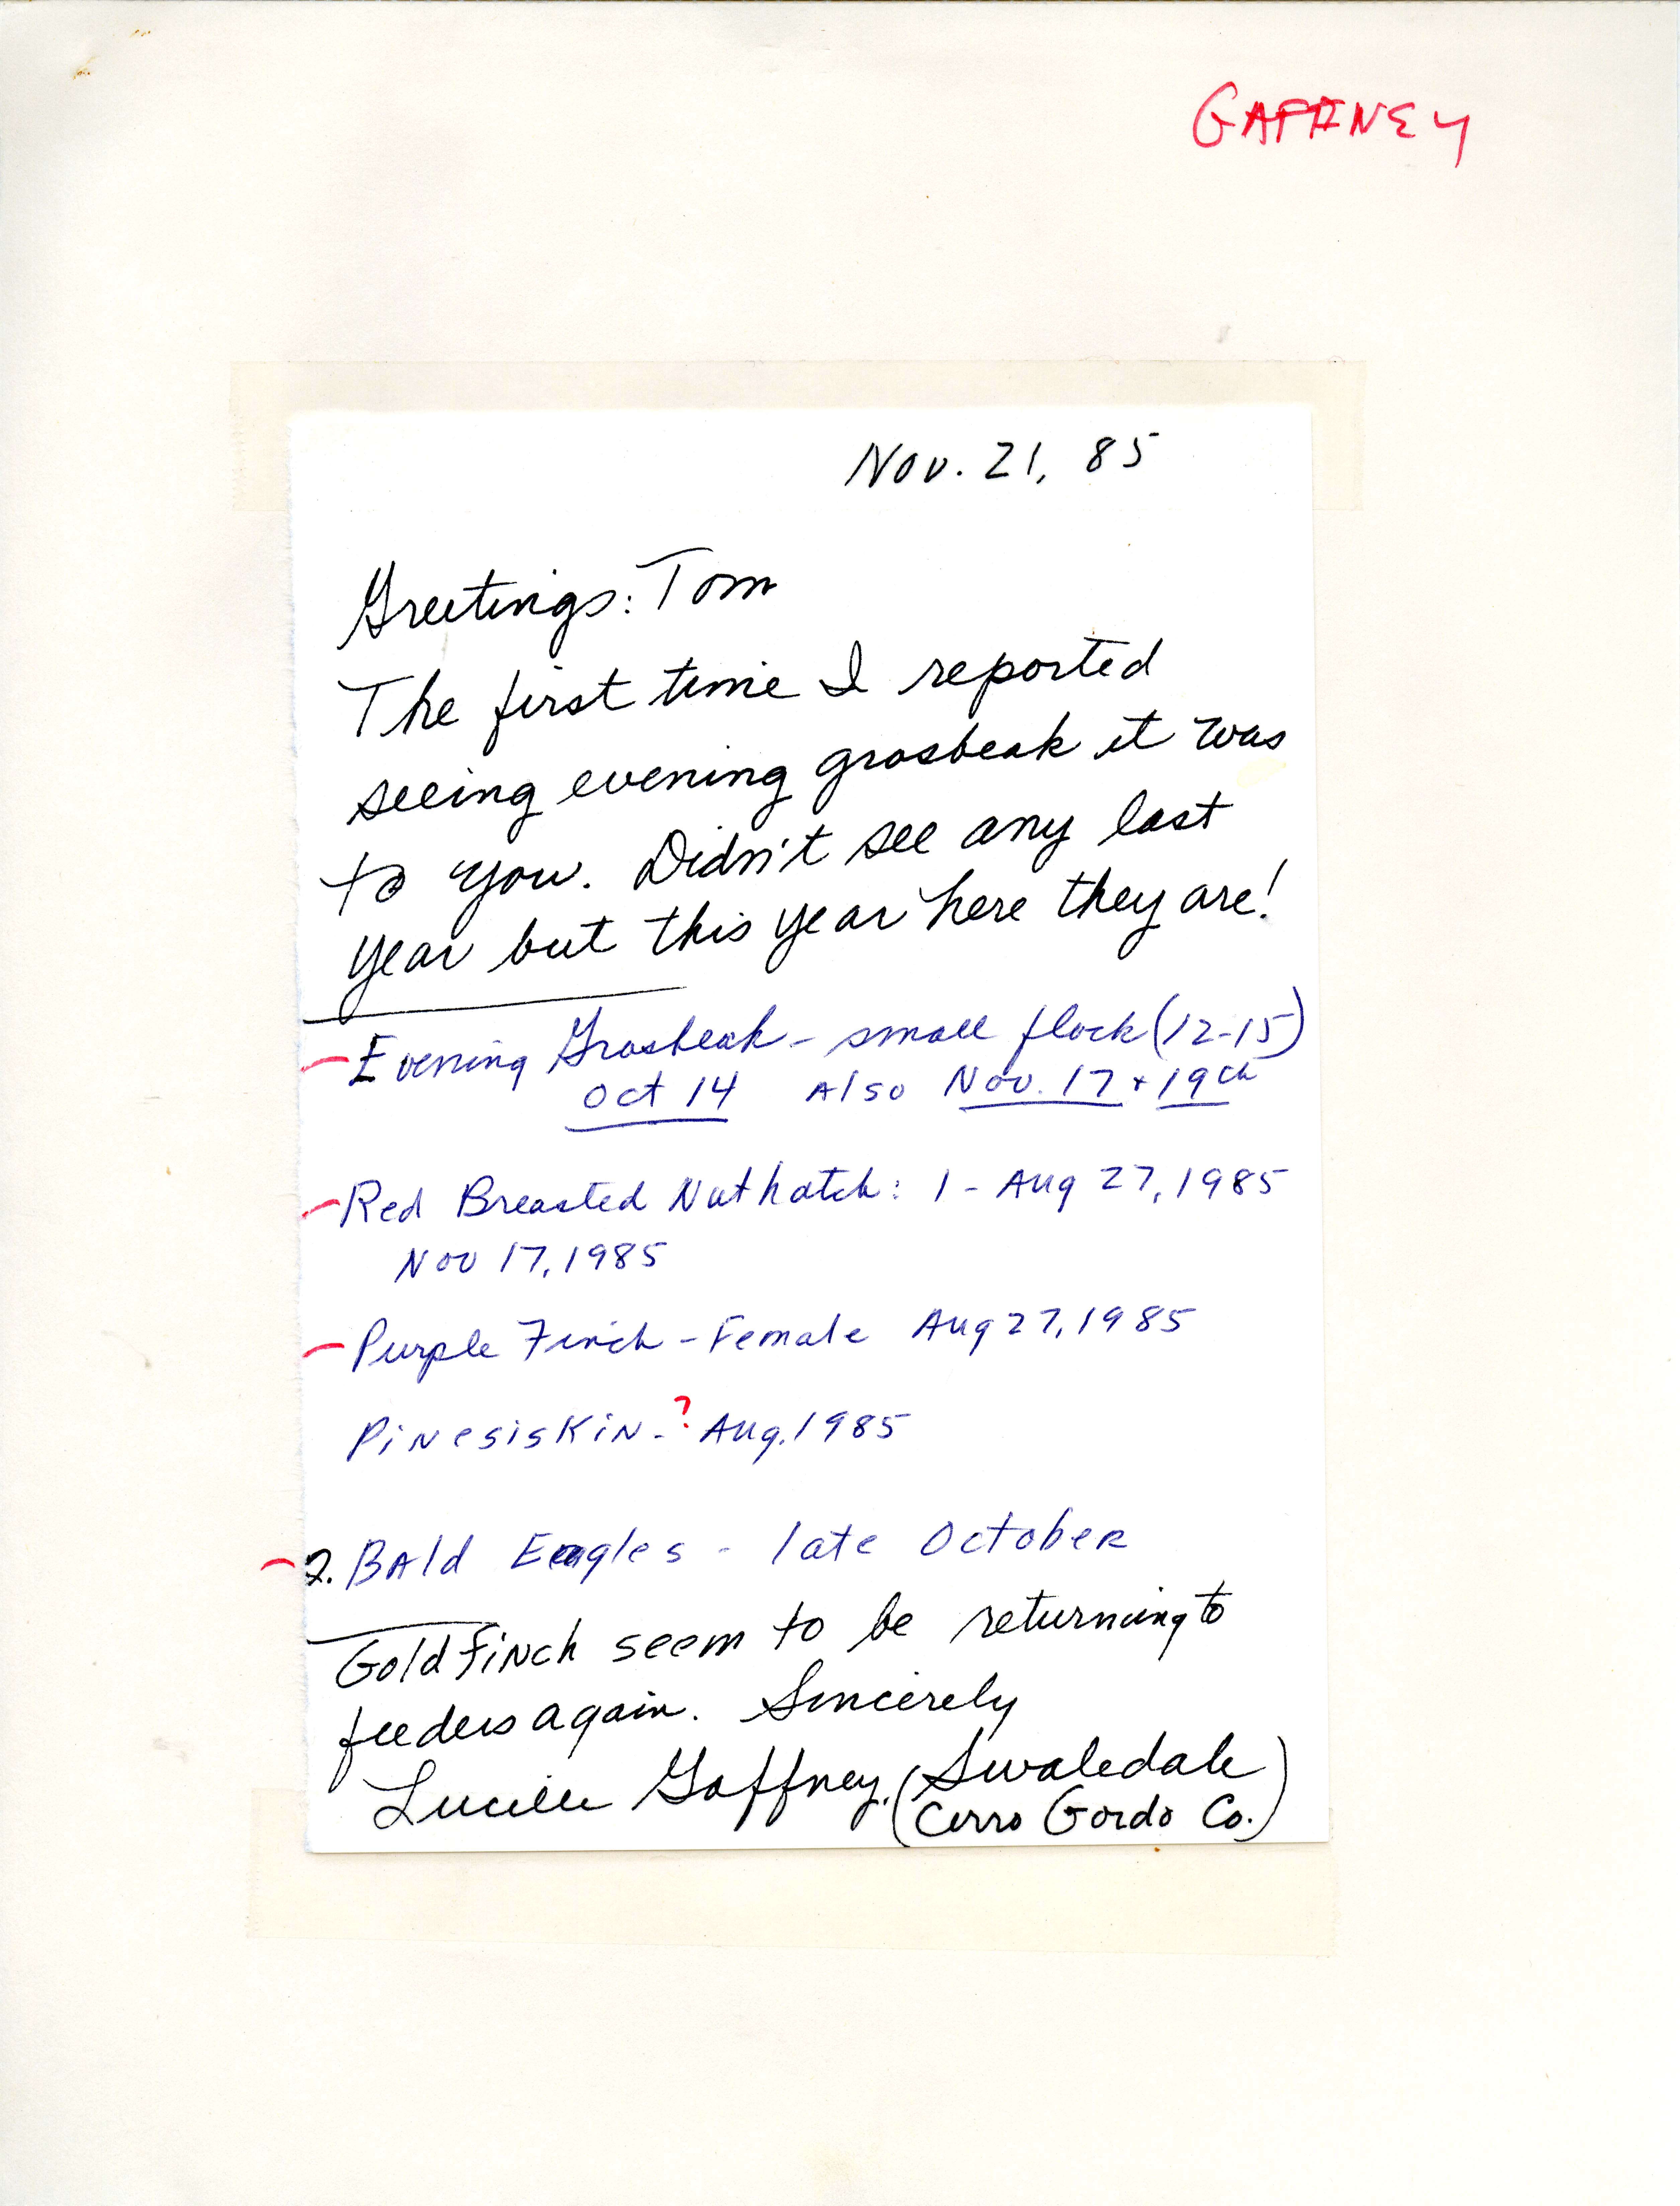 Lucille Gaffney letter to Thomas Kent regarding Evening Grosbeak flock, November 21, 1985